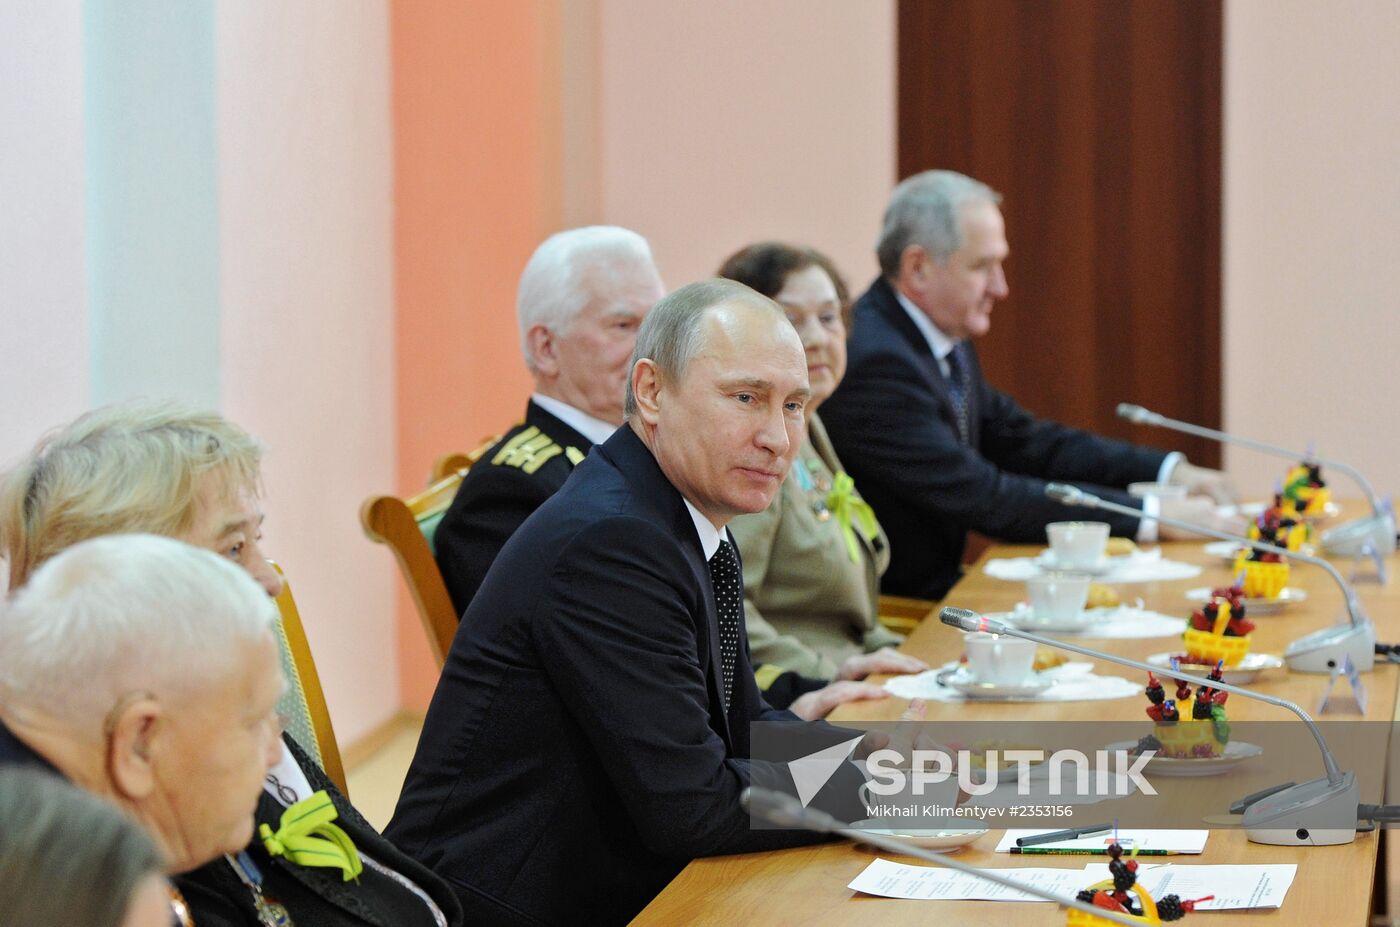 Putin attends events marking 70th anniversary of lifting Leningrad siege